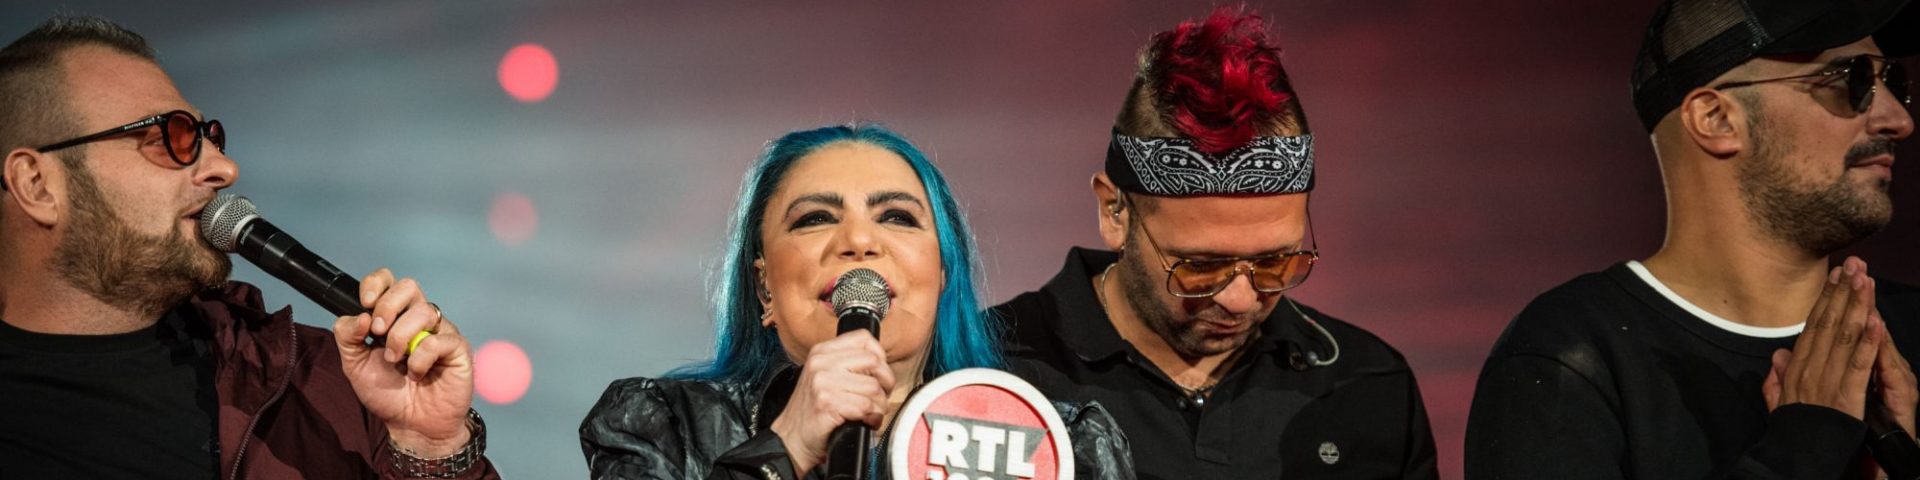 RTL 102.5 Power Hits Estate 2018: tutti i premi